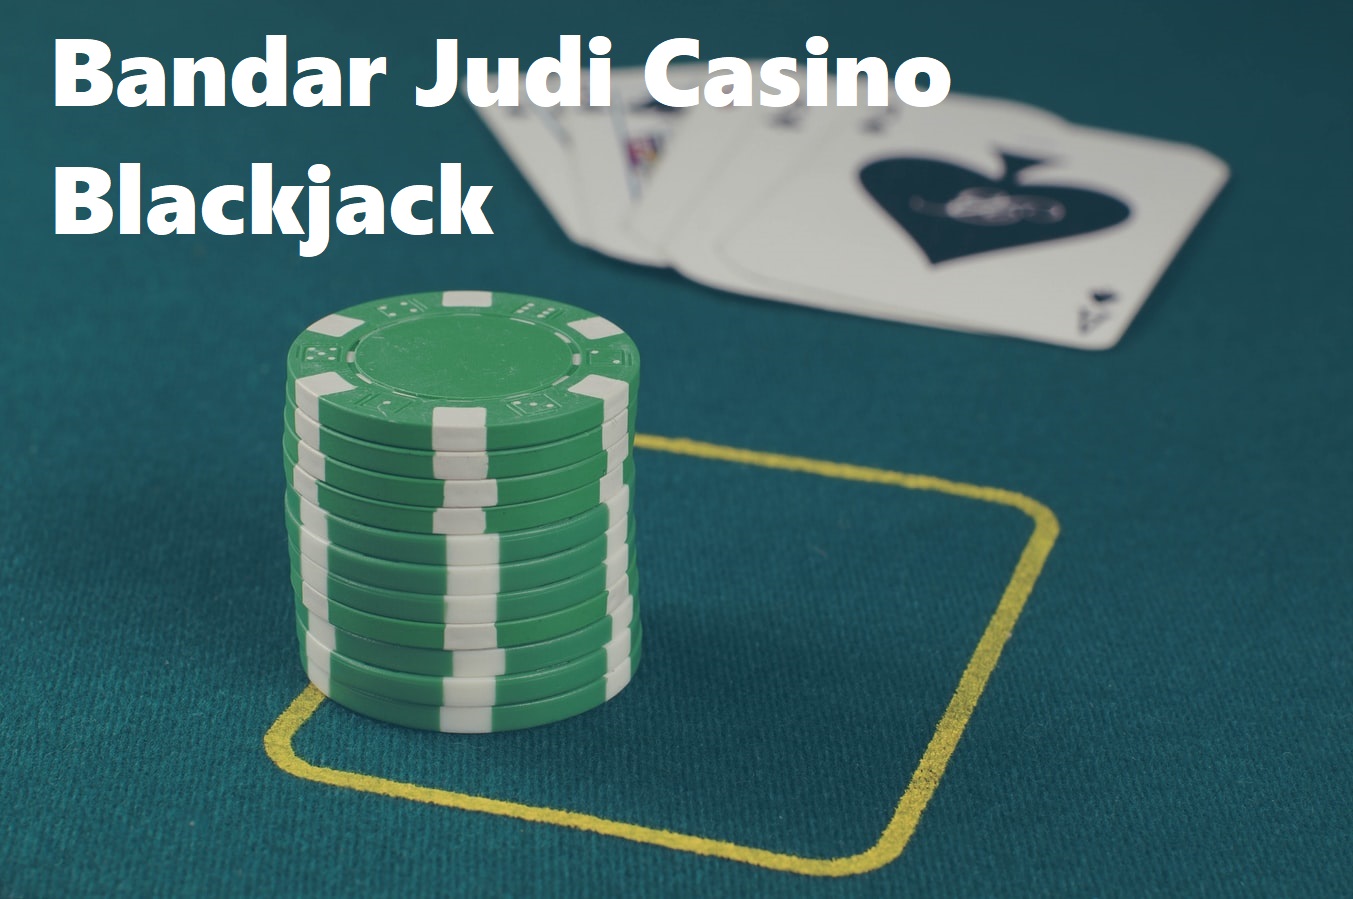 Bandar Judi Casino Blackjack